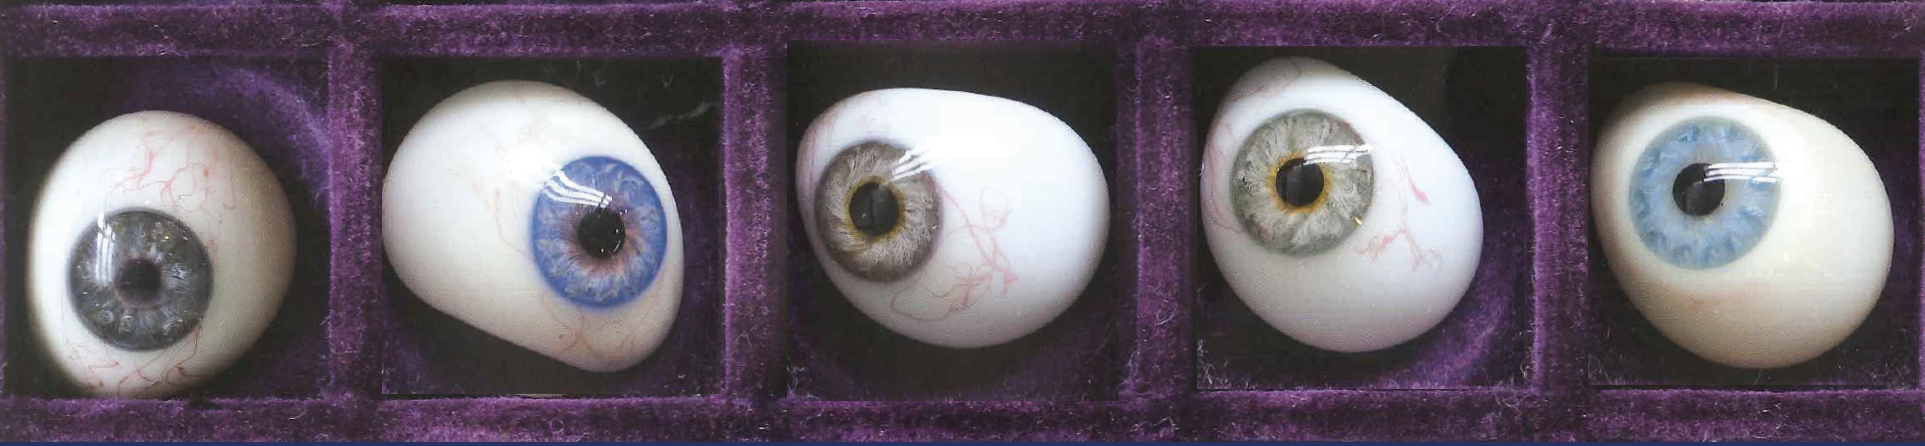 Rotterdam Ocular Melanoma Center